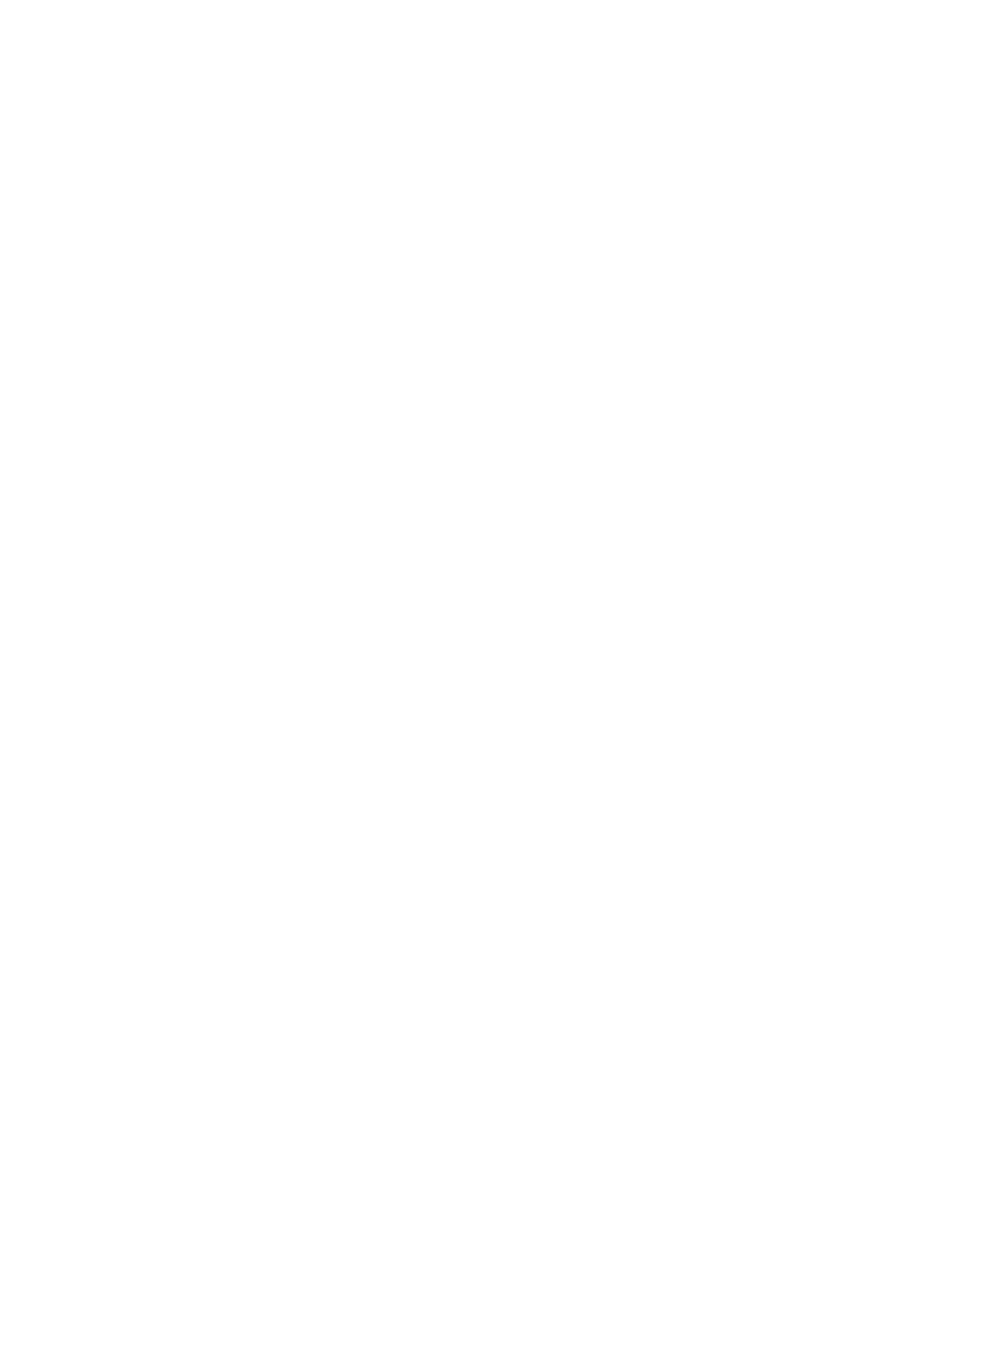 logo di Whitehorse City Council